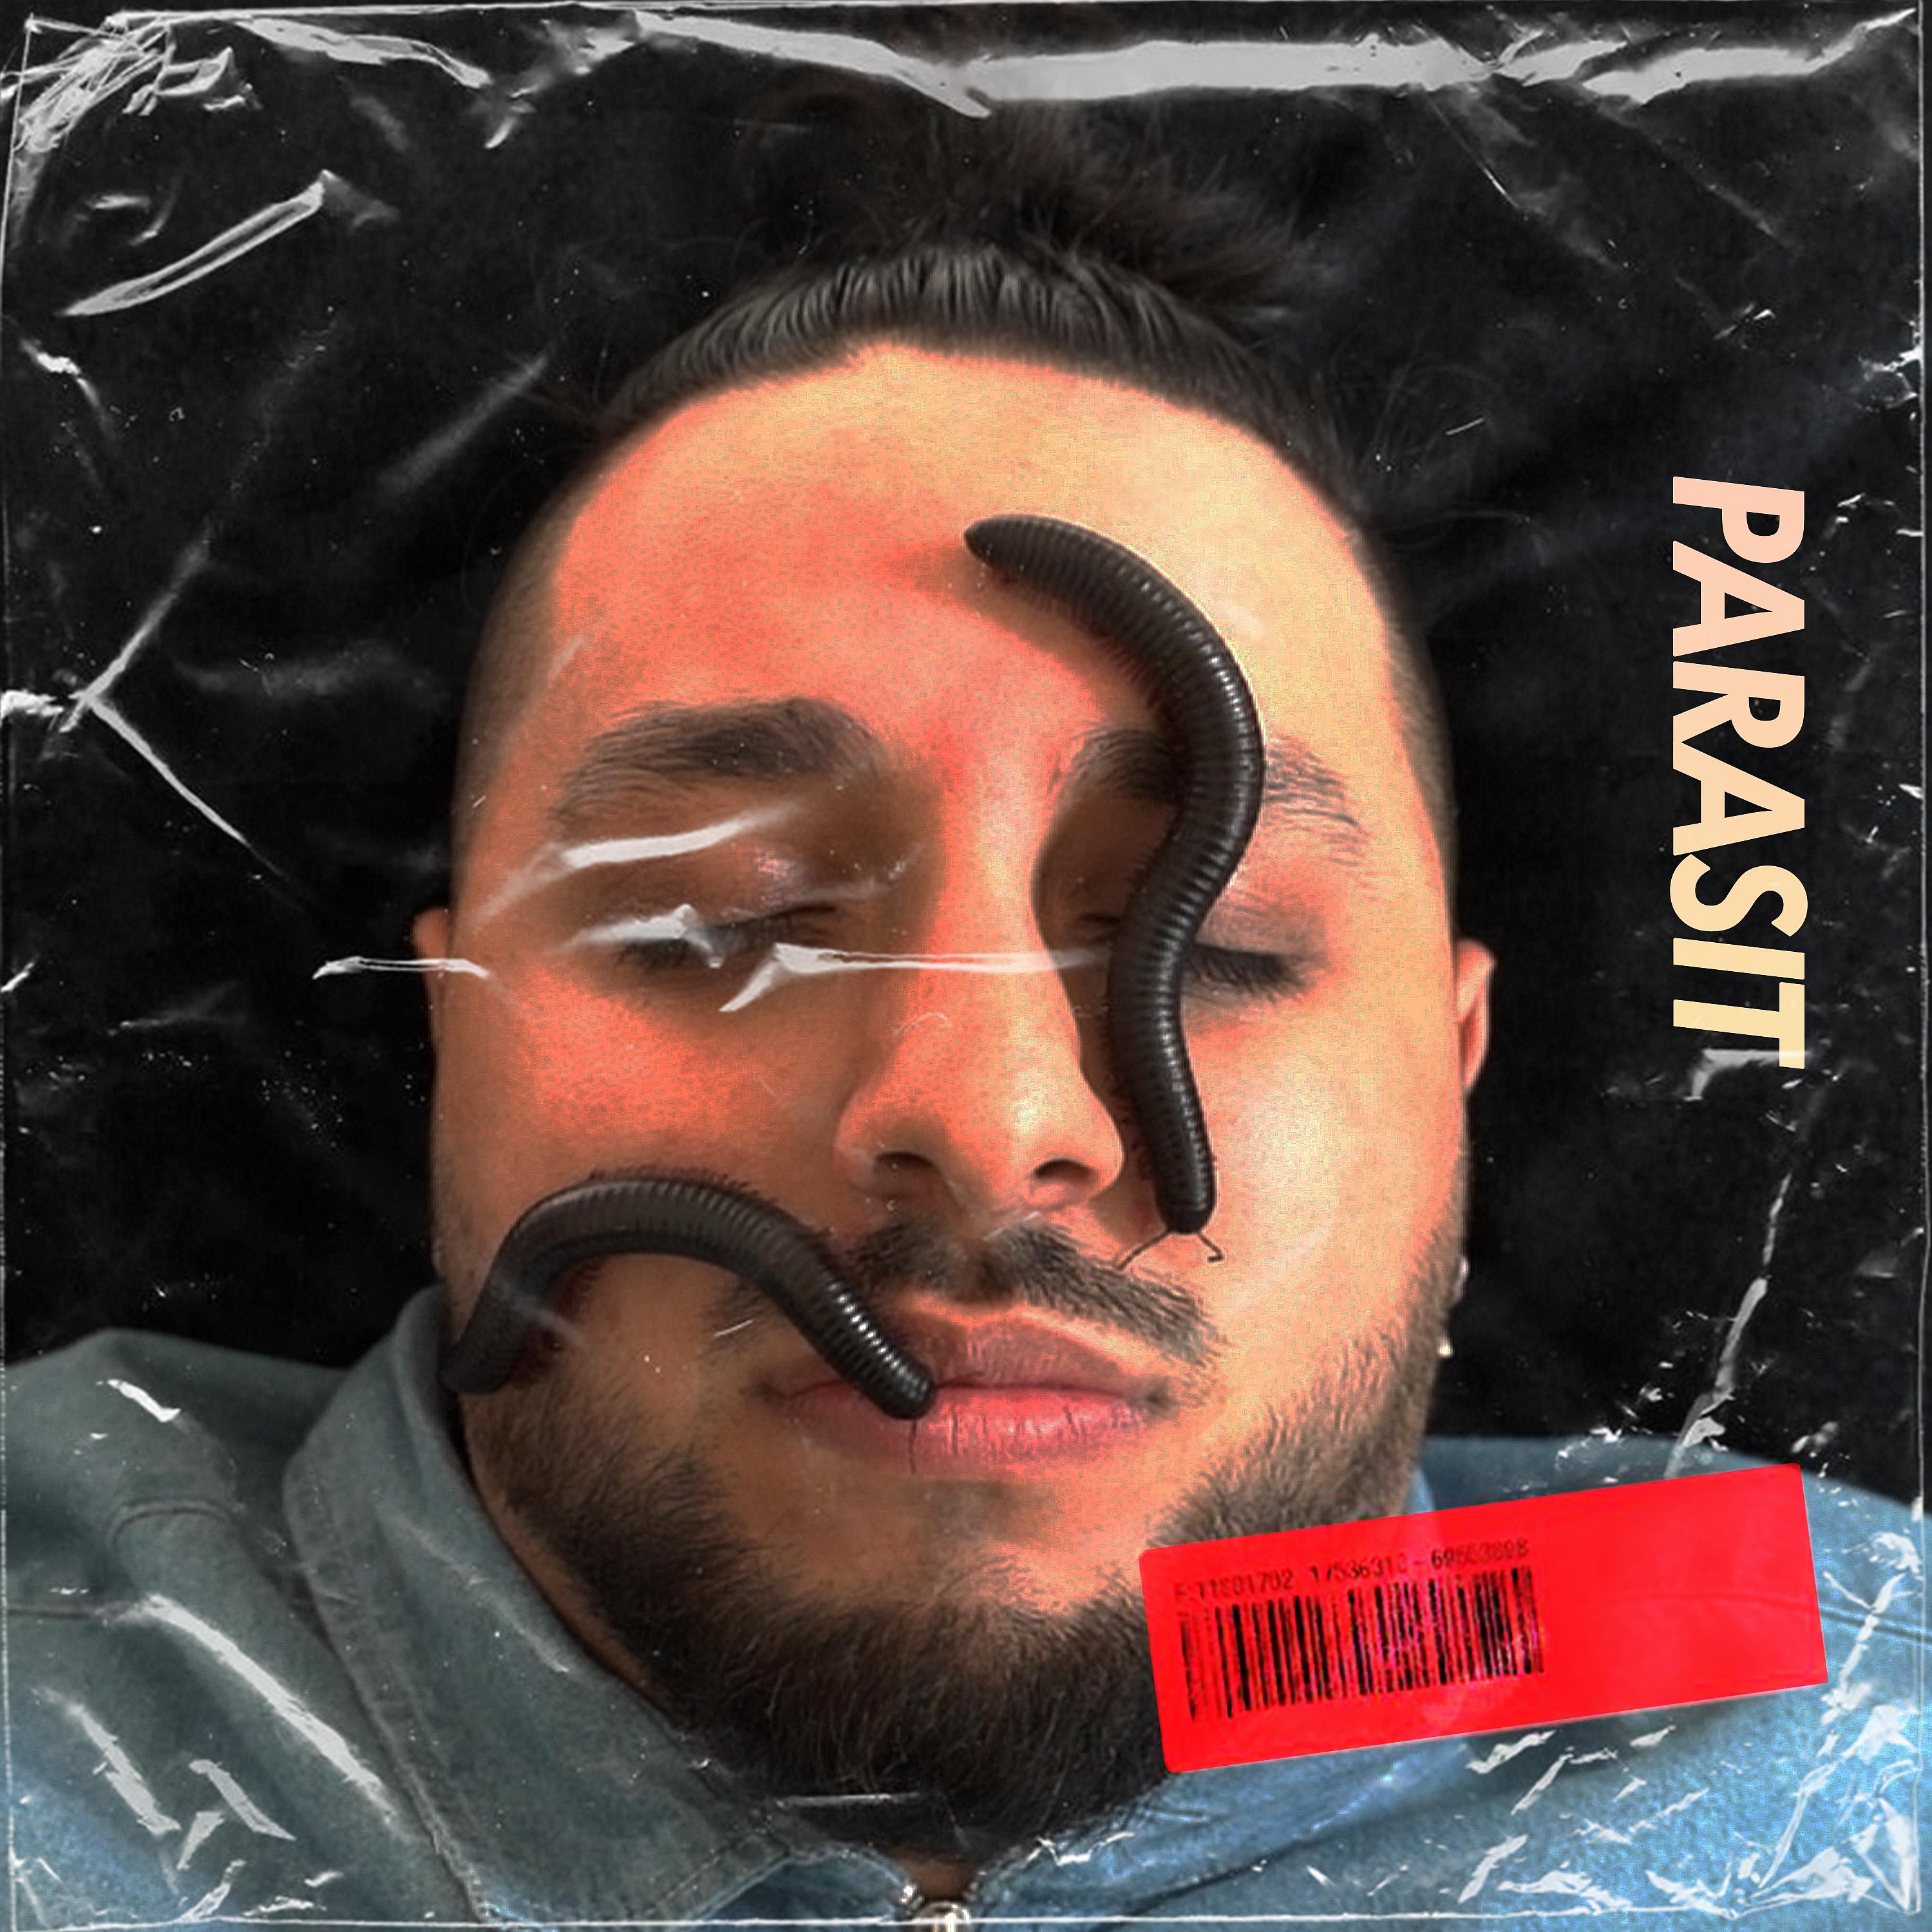 Постер альбома Parasit